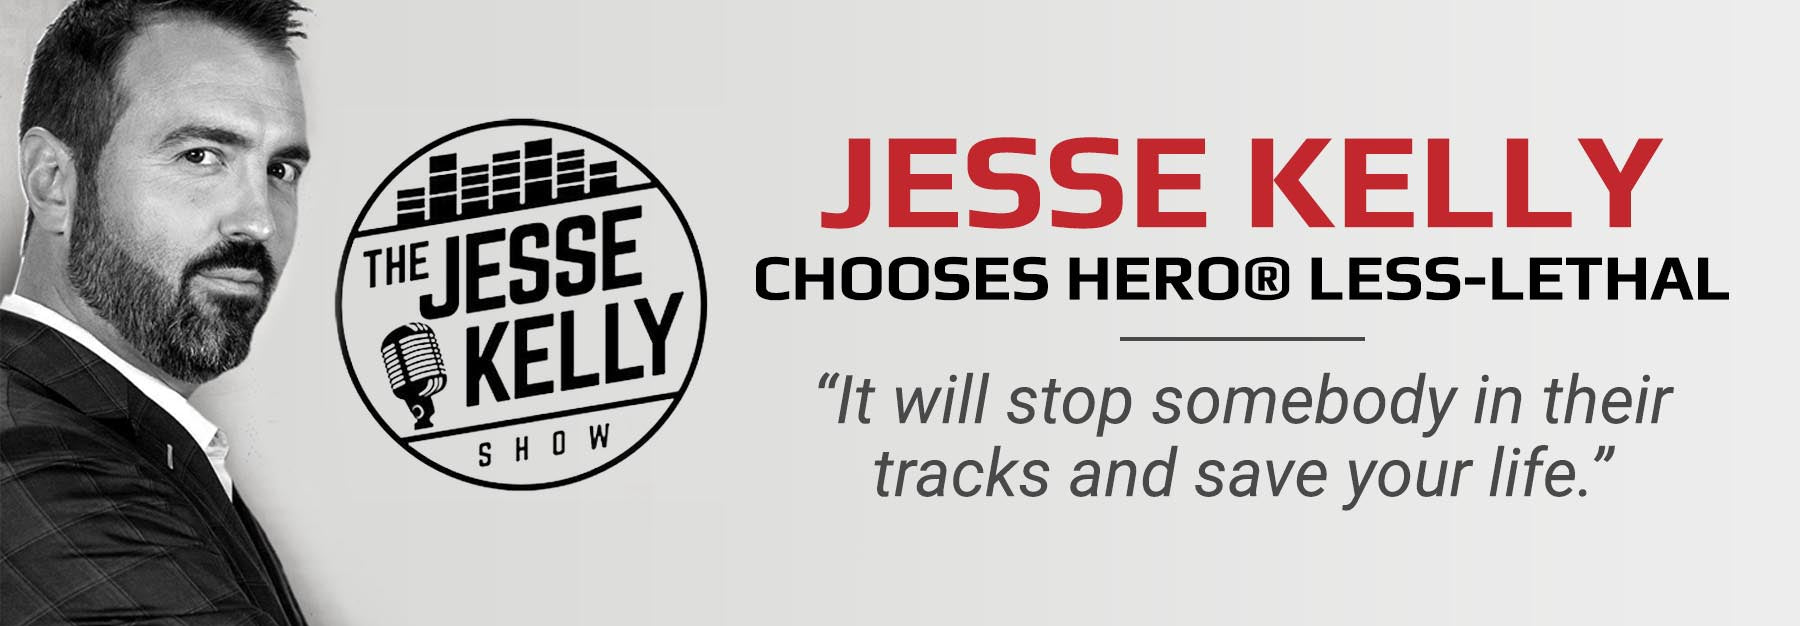 Jesse Kelly HERO Gun Picks